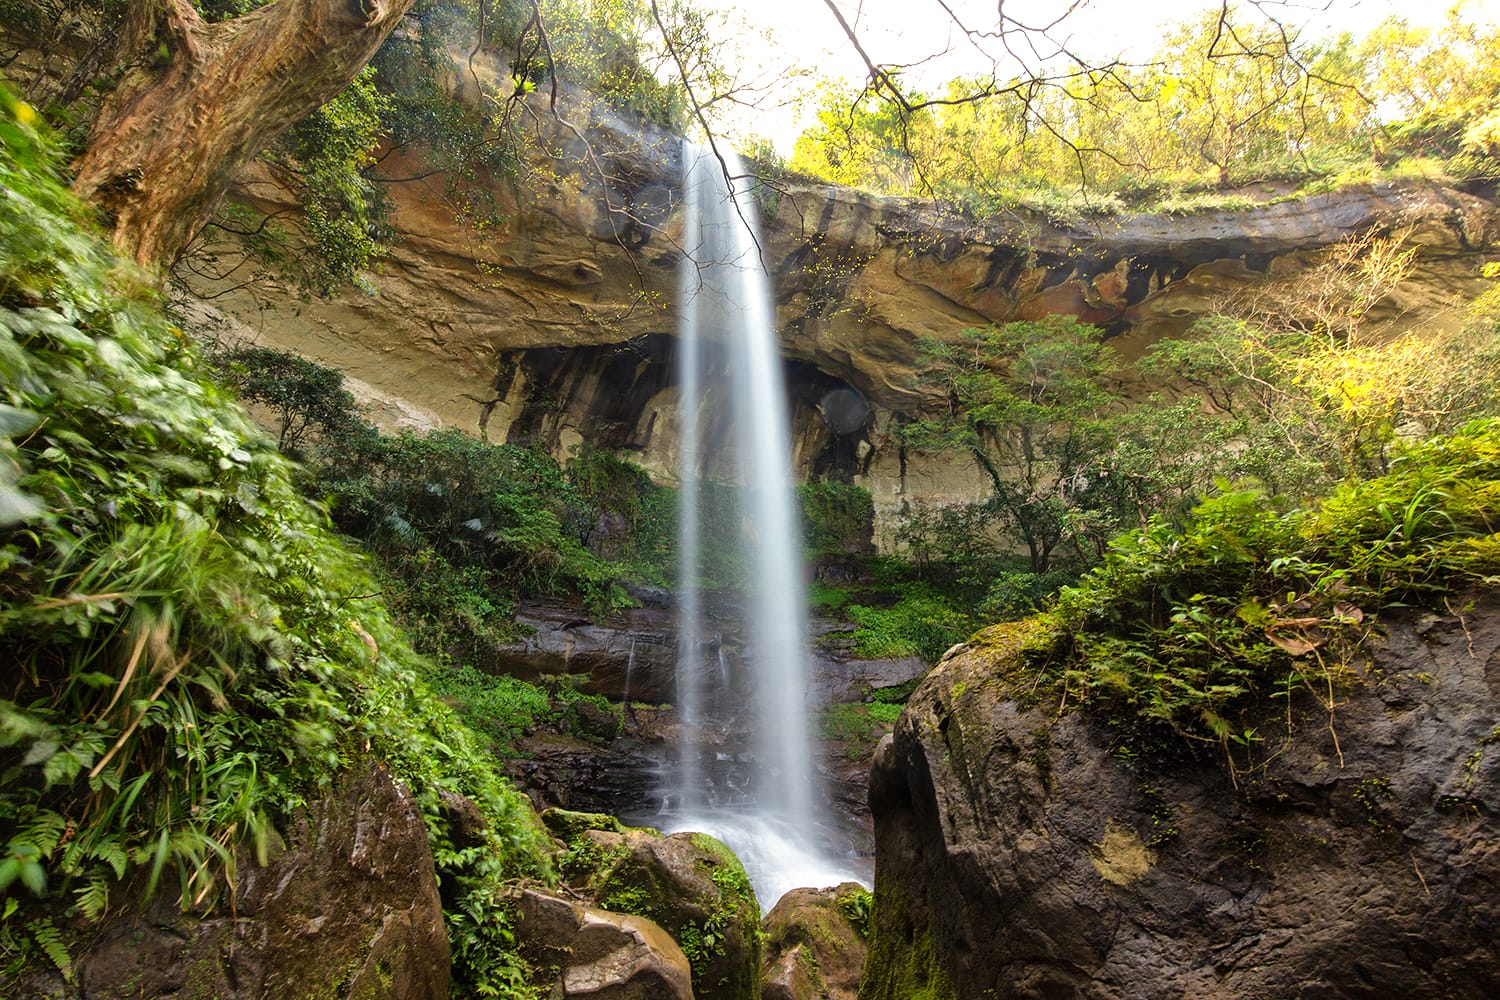 Motian waterfall in Sandiaoling park, Taipei province, Taiwan